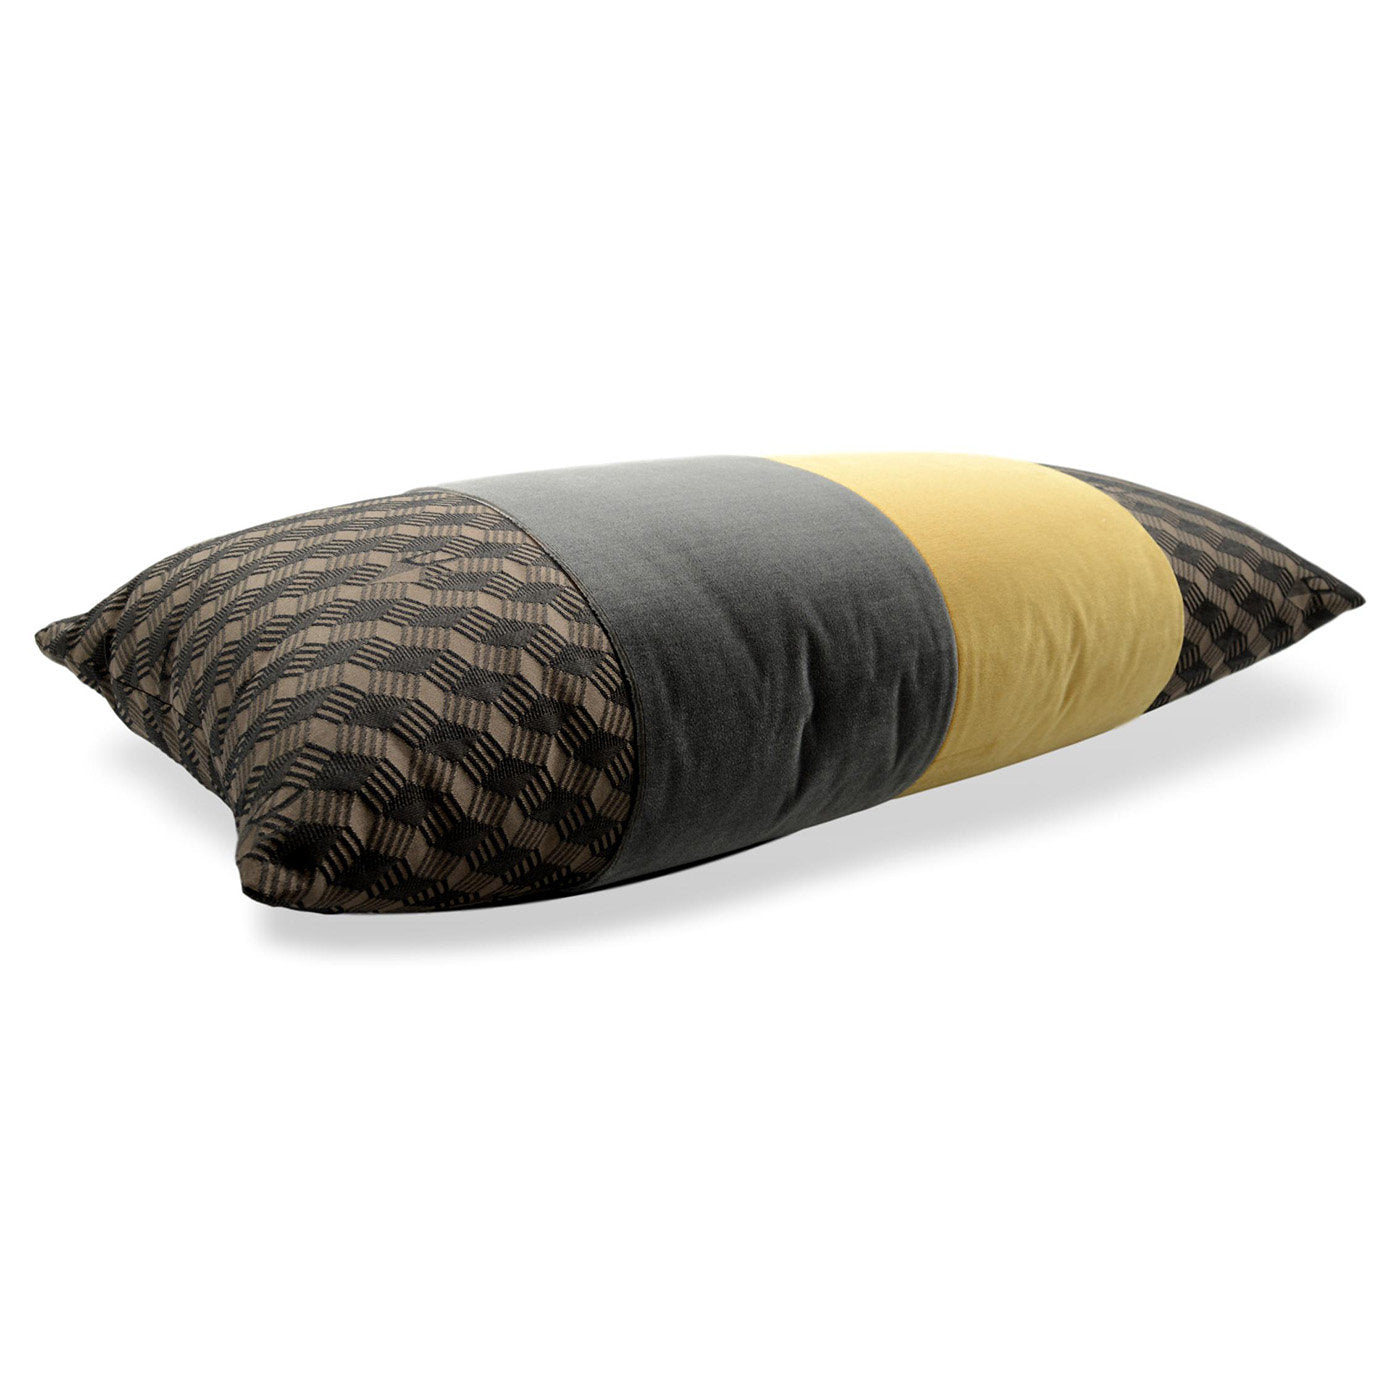 Rectangular Degradè Cushion in jacquard fabric and silk velvet - Alternative view 1